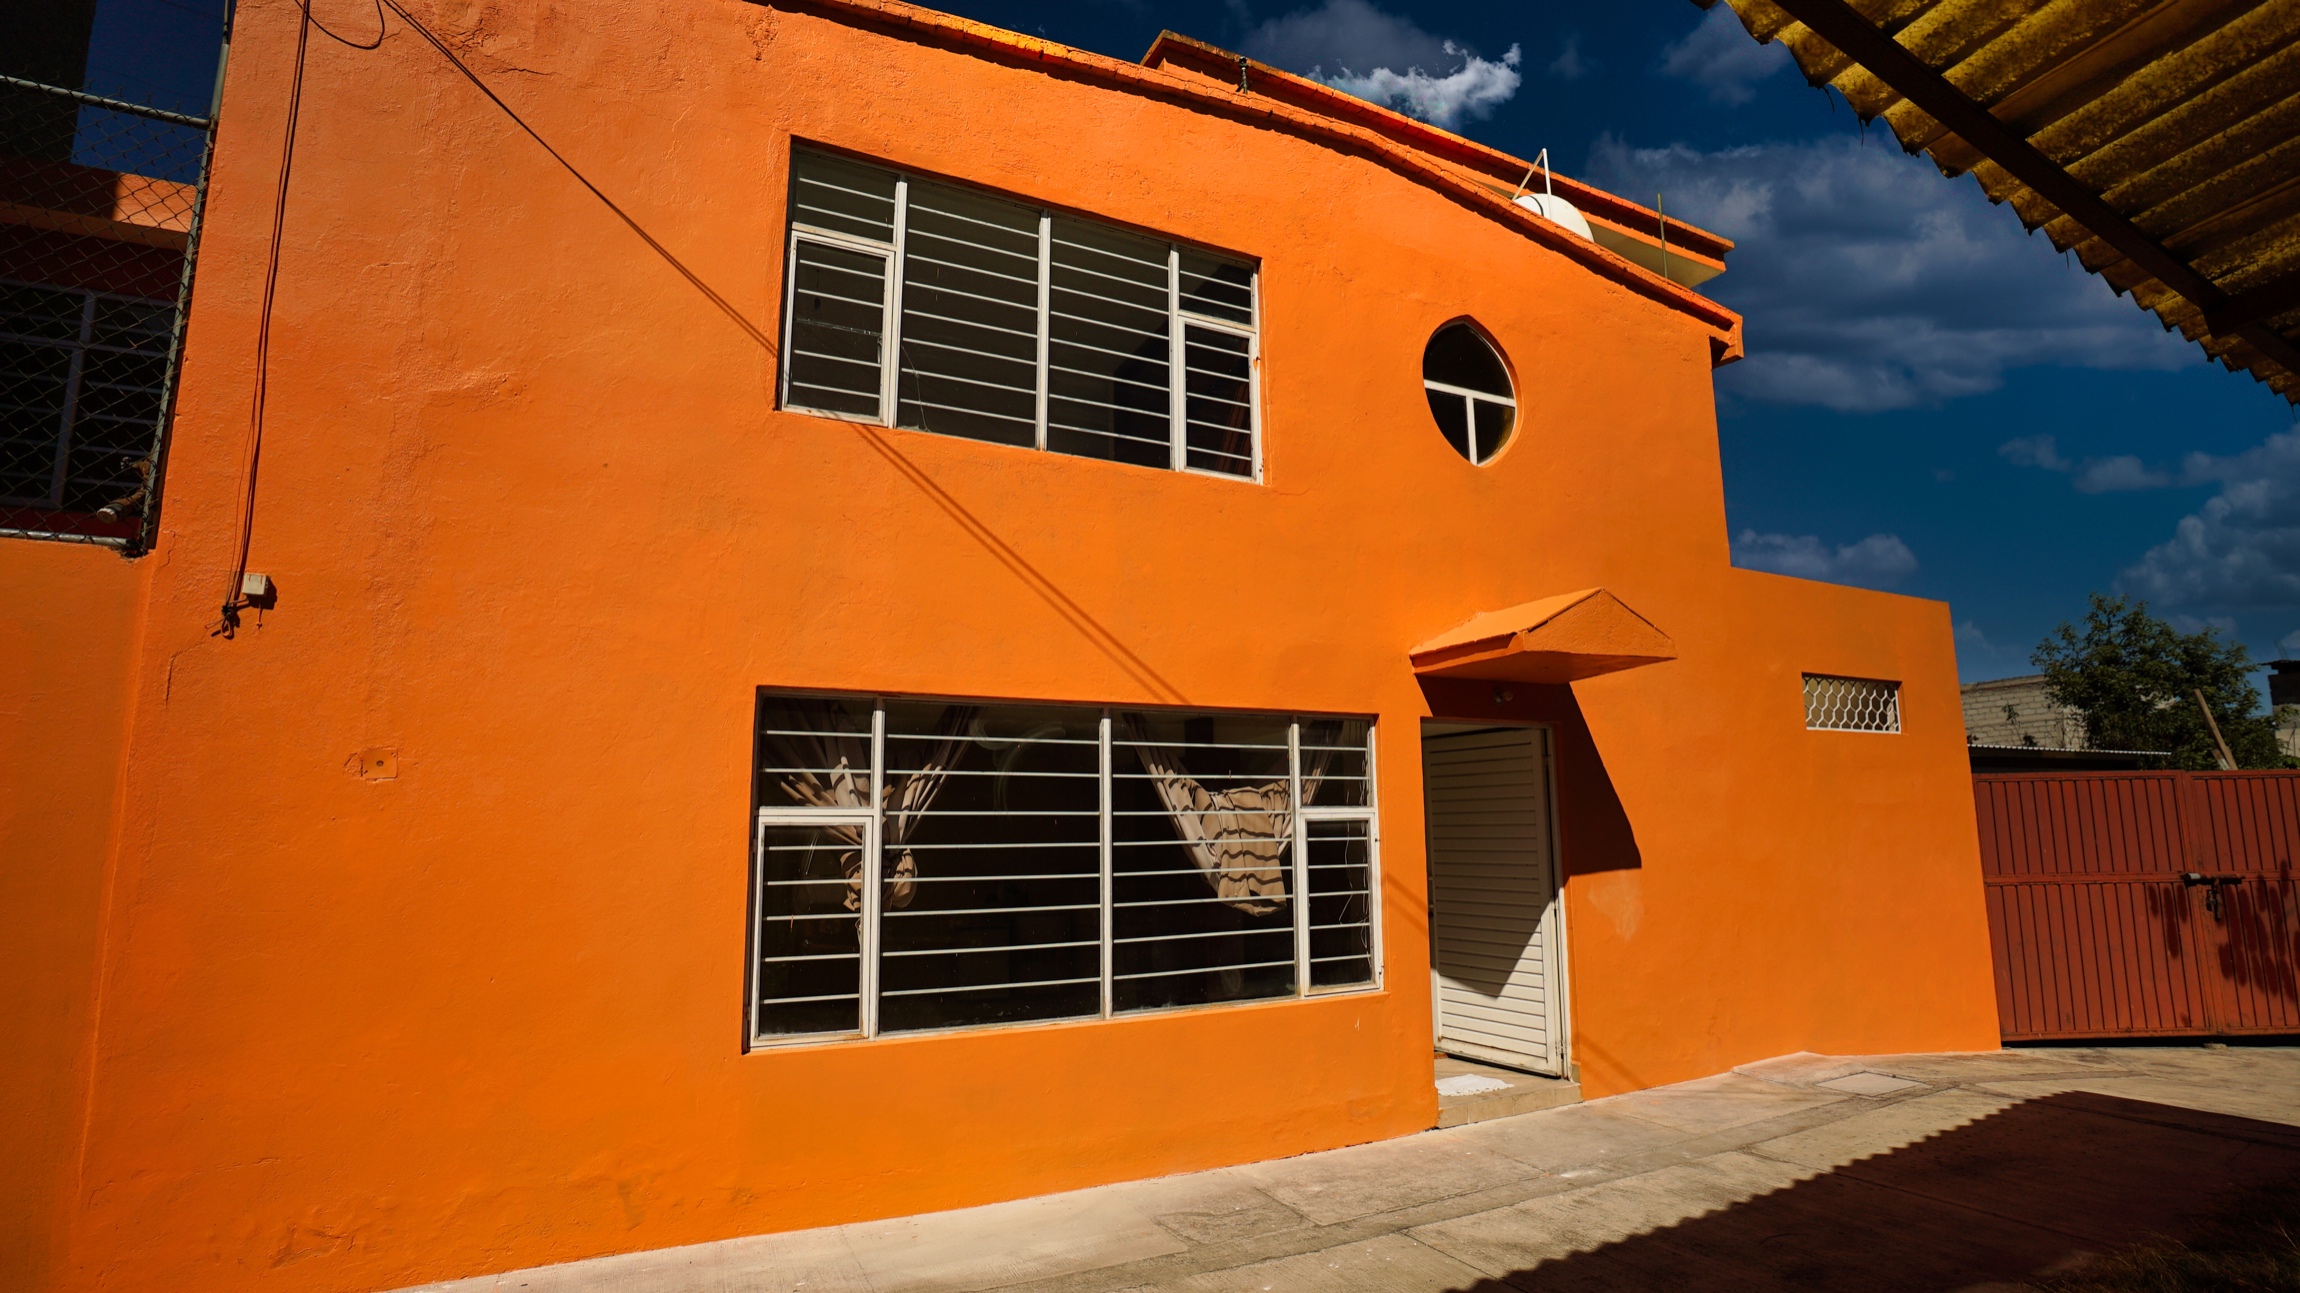 Casa en José Ma. Coss oriente número 50, Colonia Melchor Ocampo de Zitácuaro Michoacán.